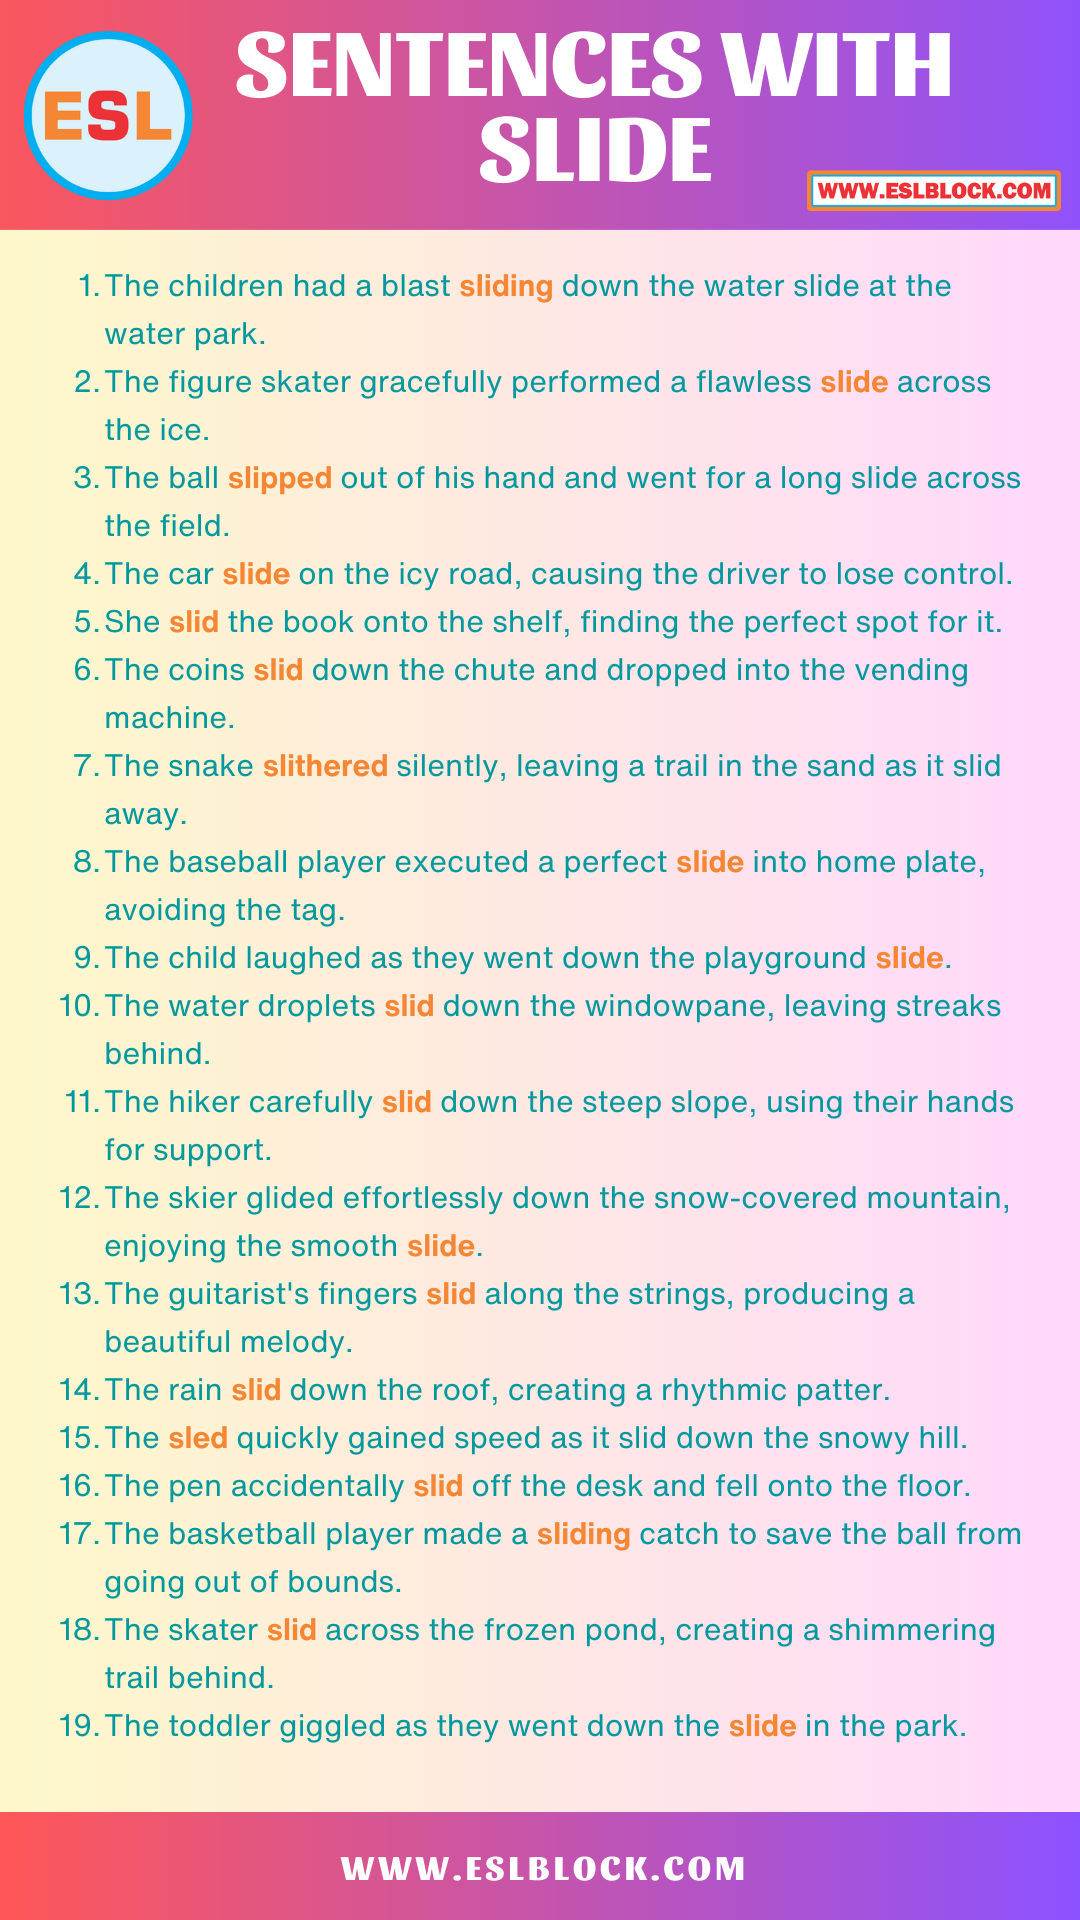 Sentences with Slide